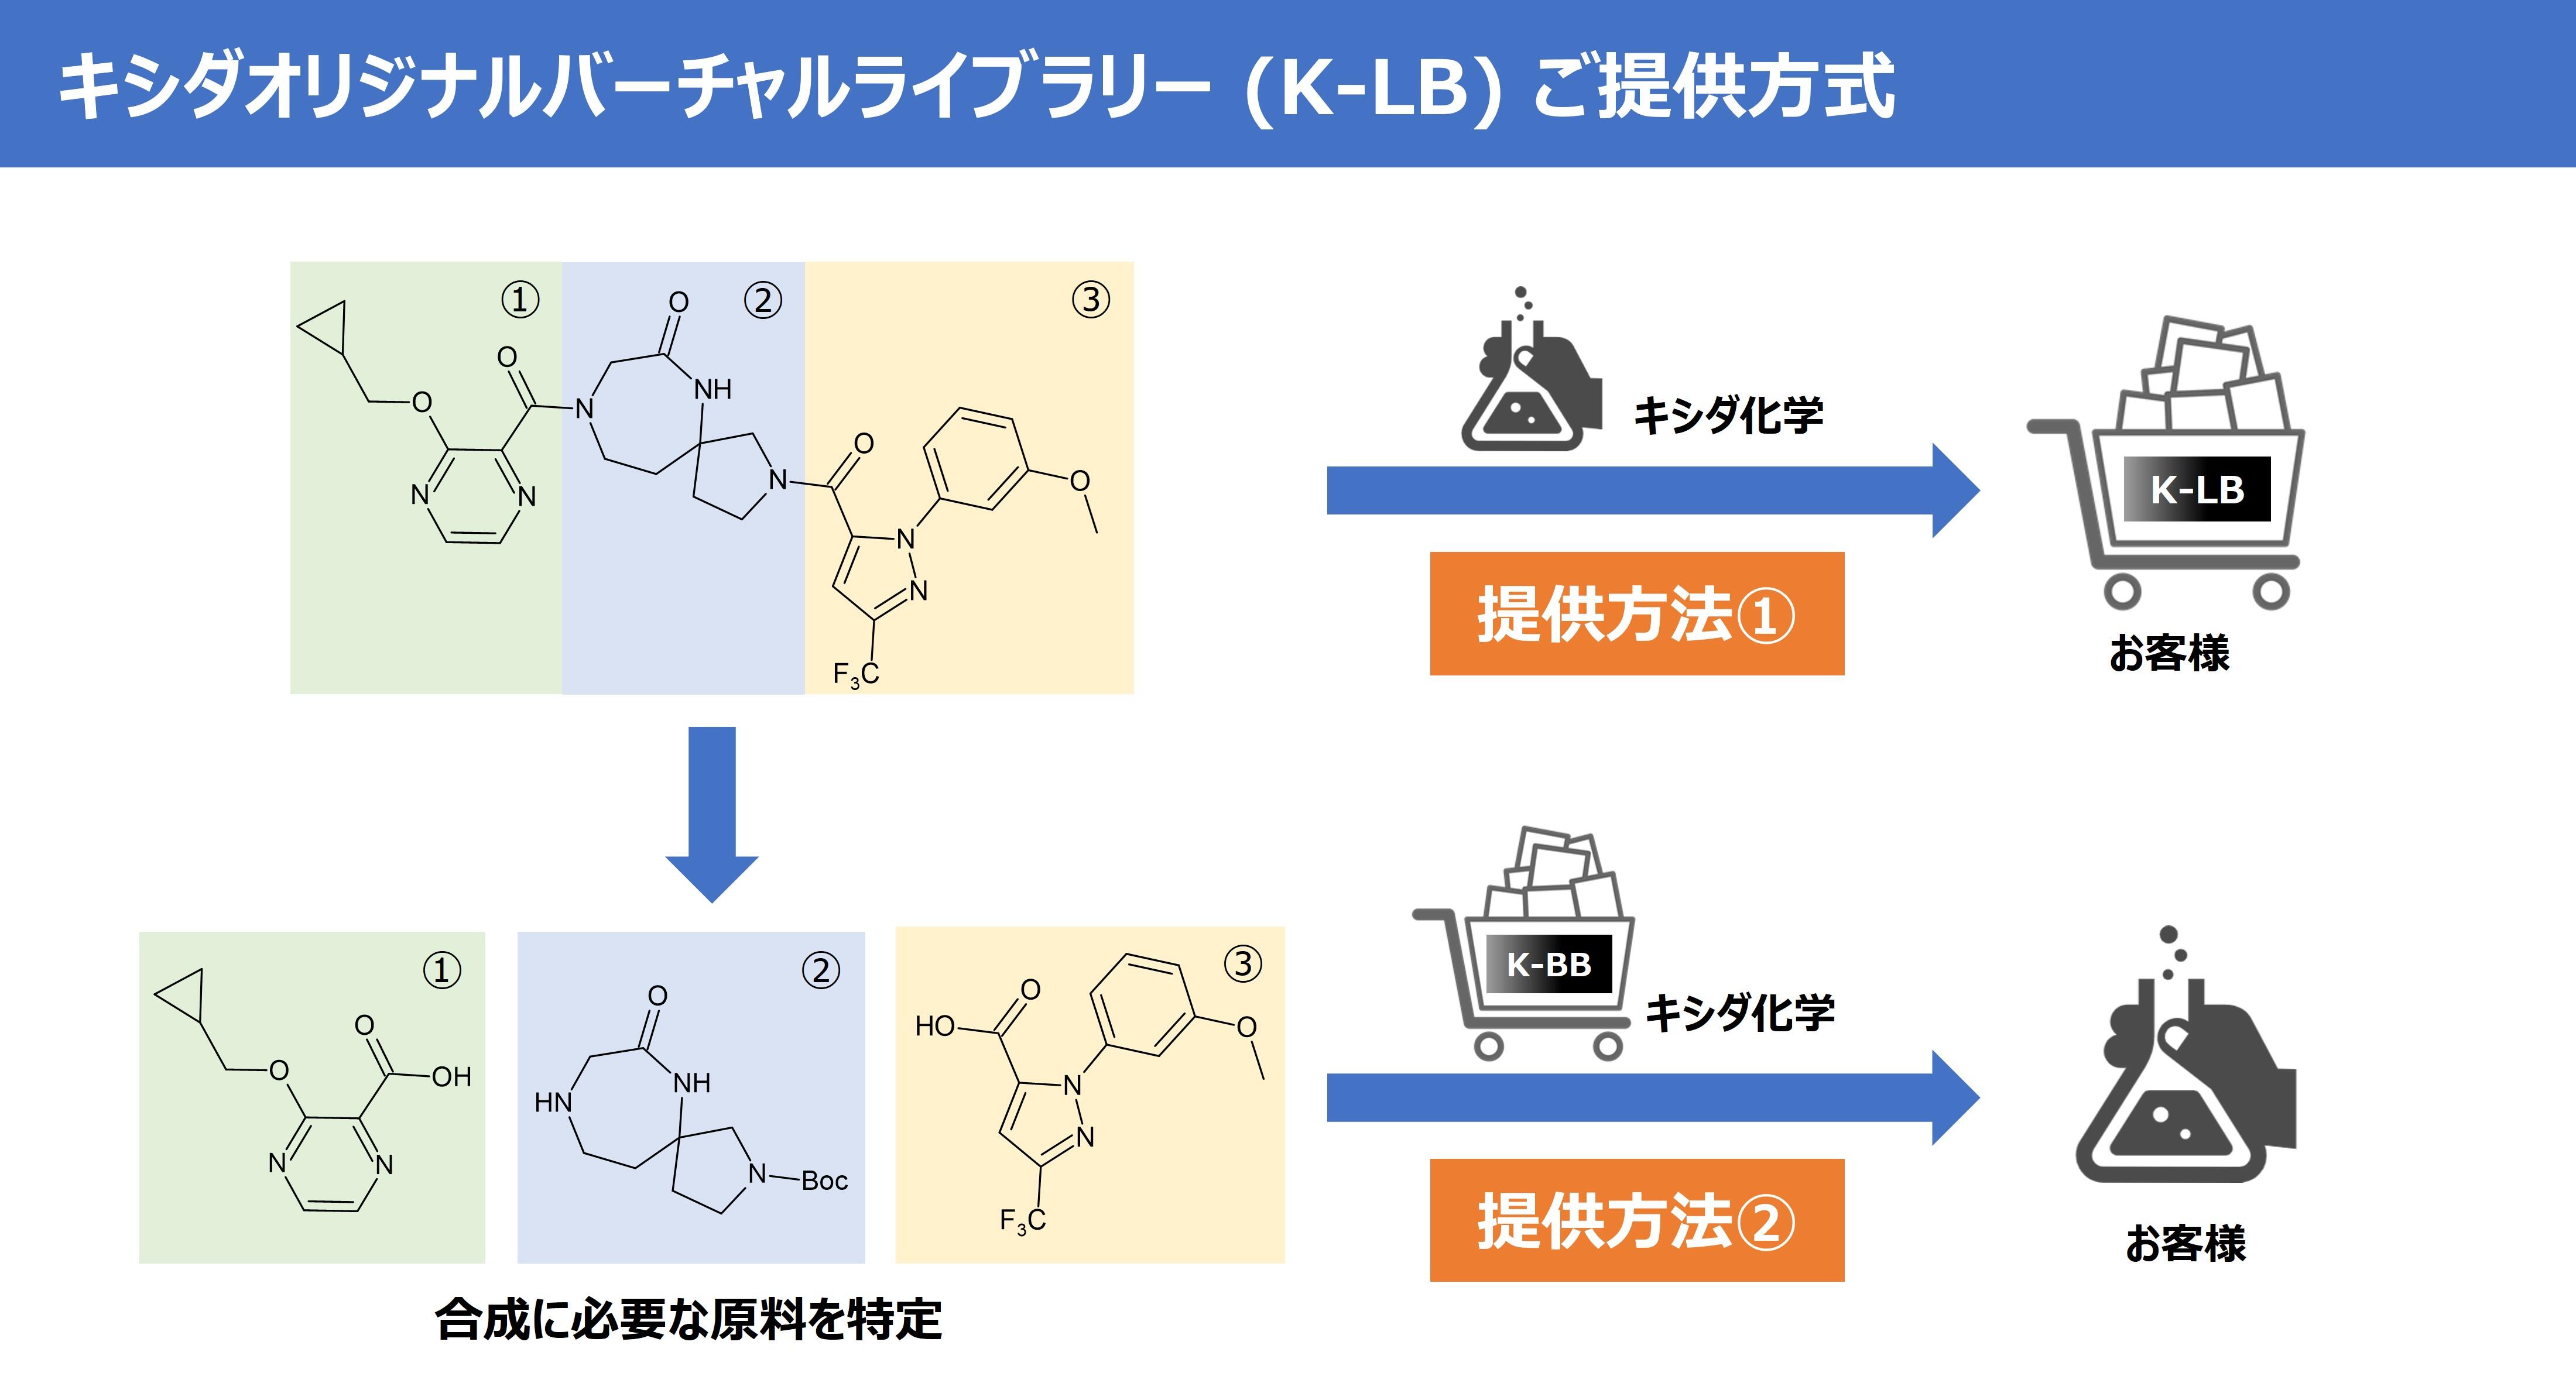 K-LB Molecular Weight